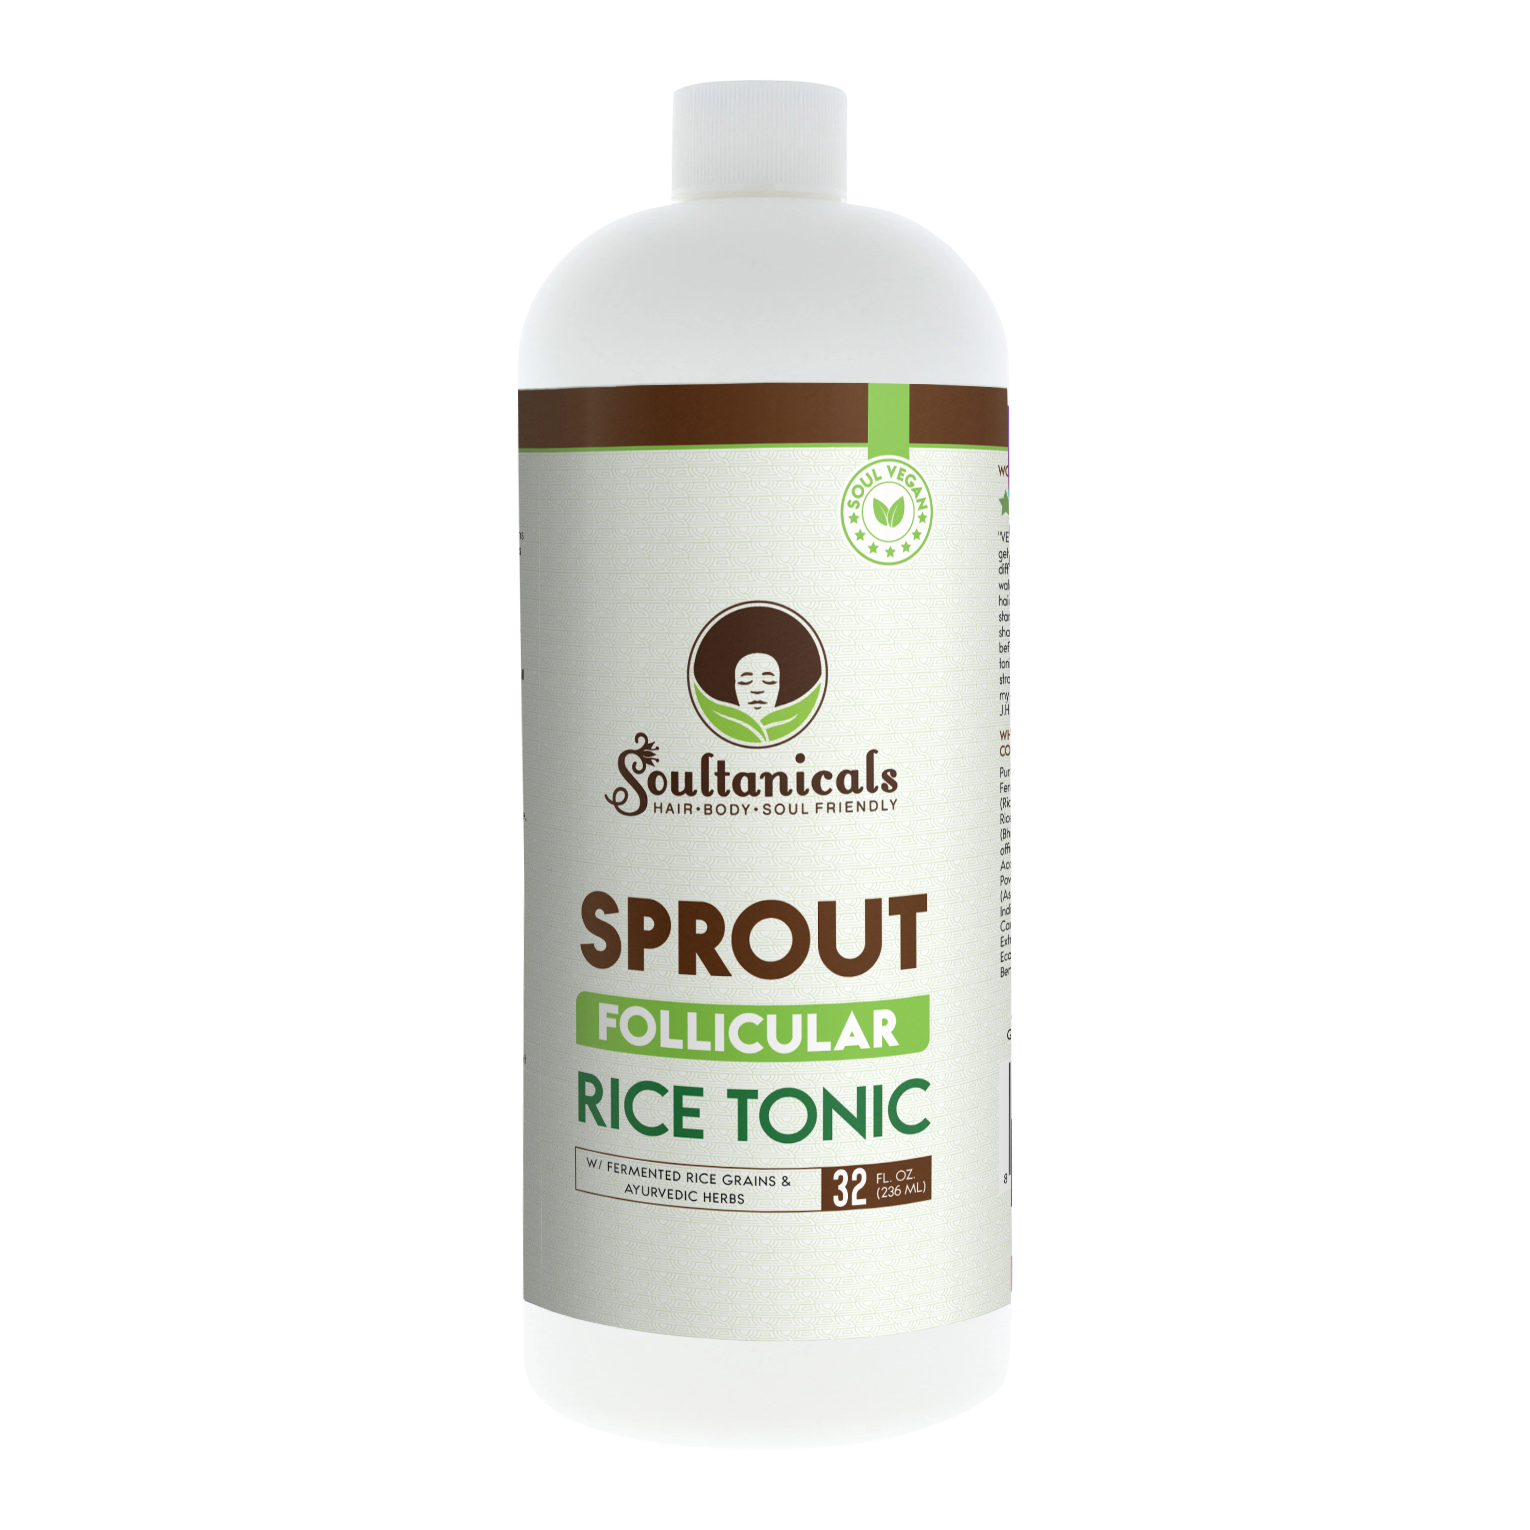 SPROUT- Follicular Rice Tonic SALON SIZE